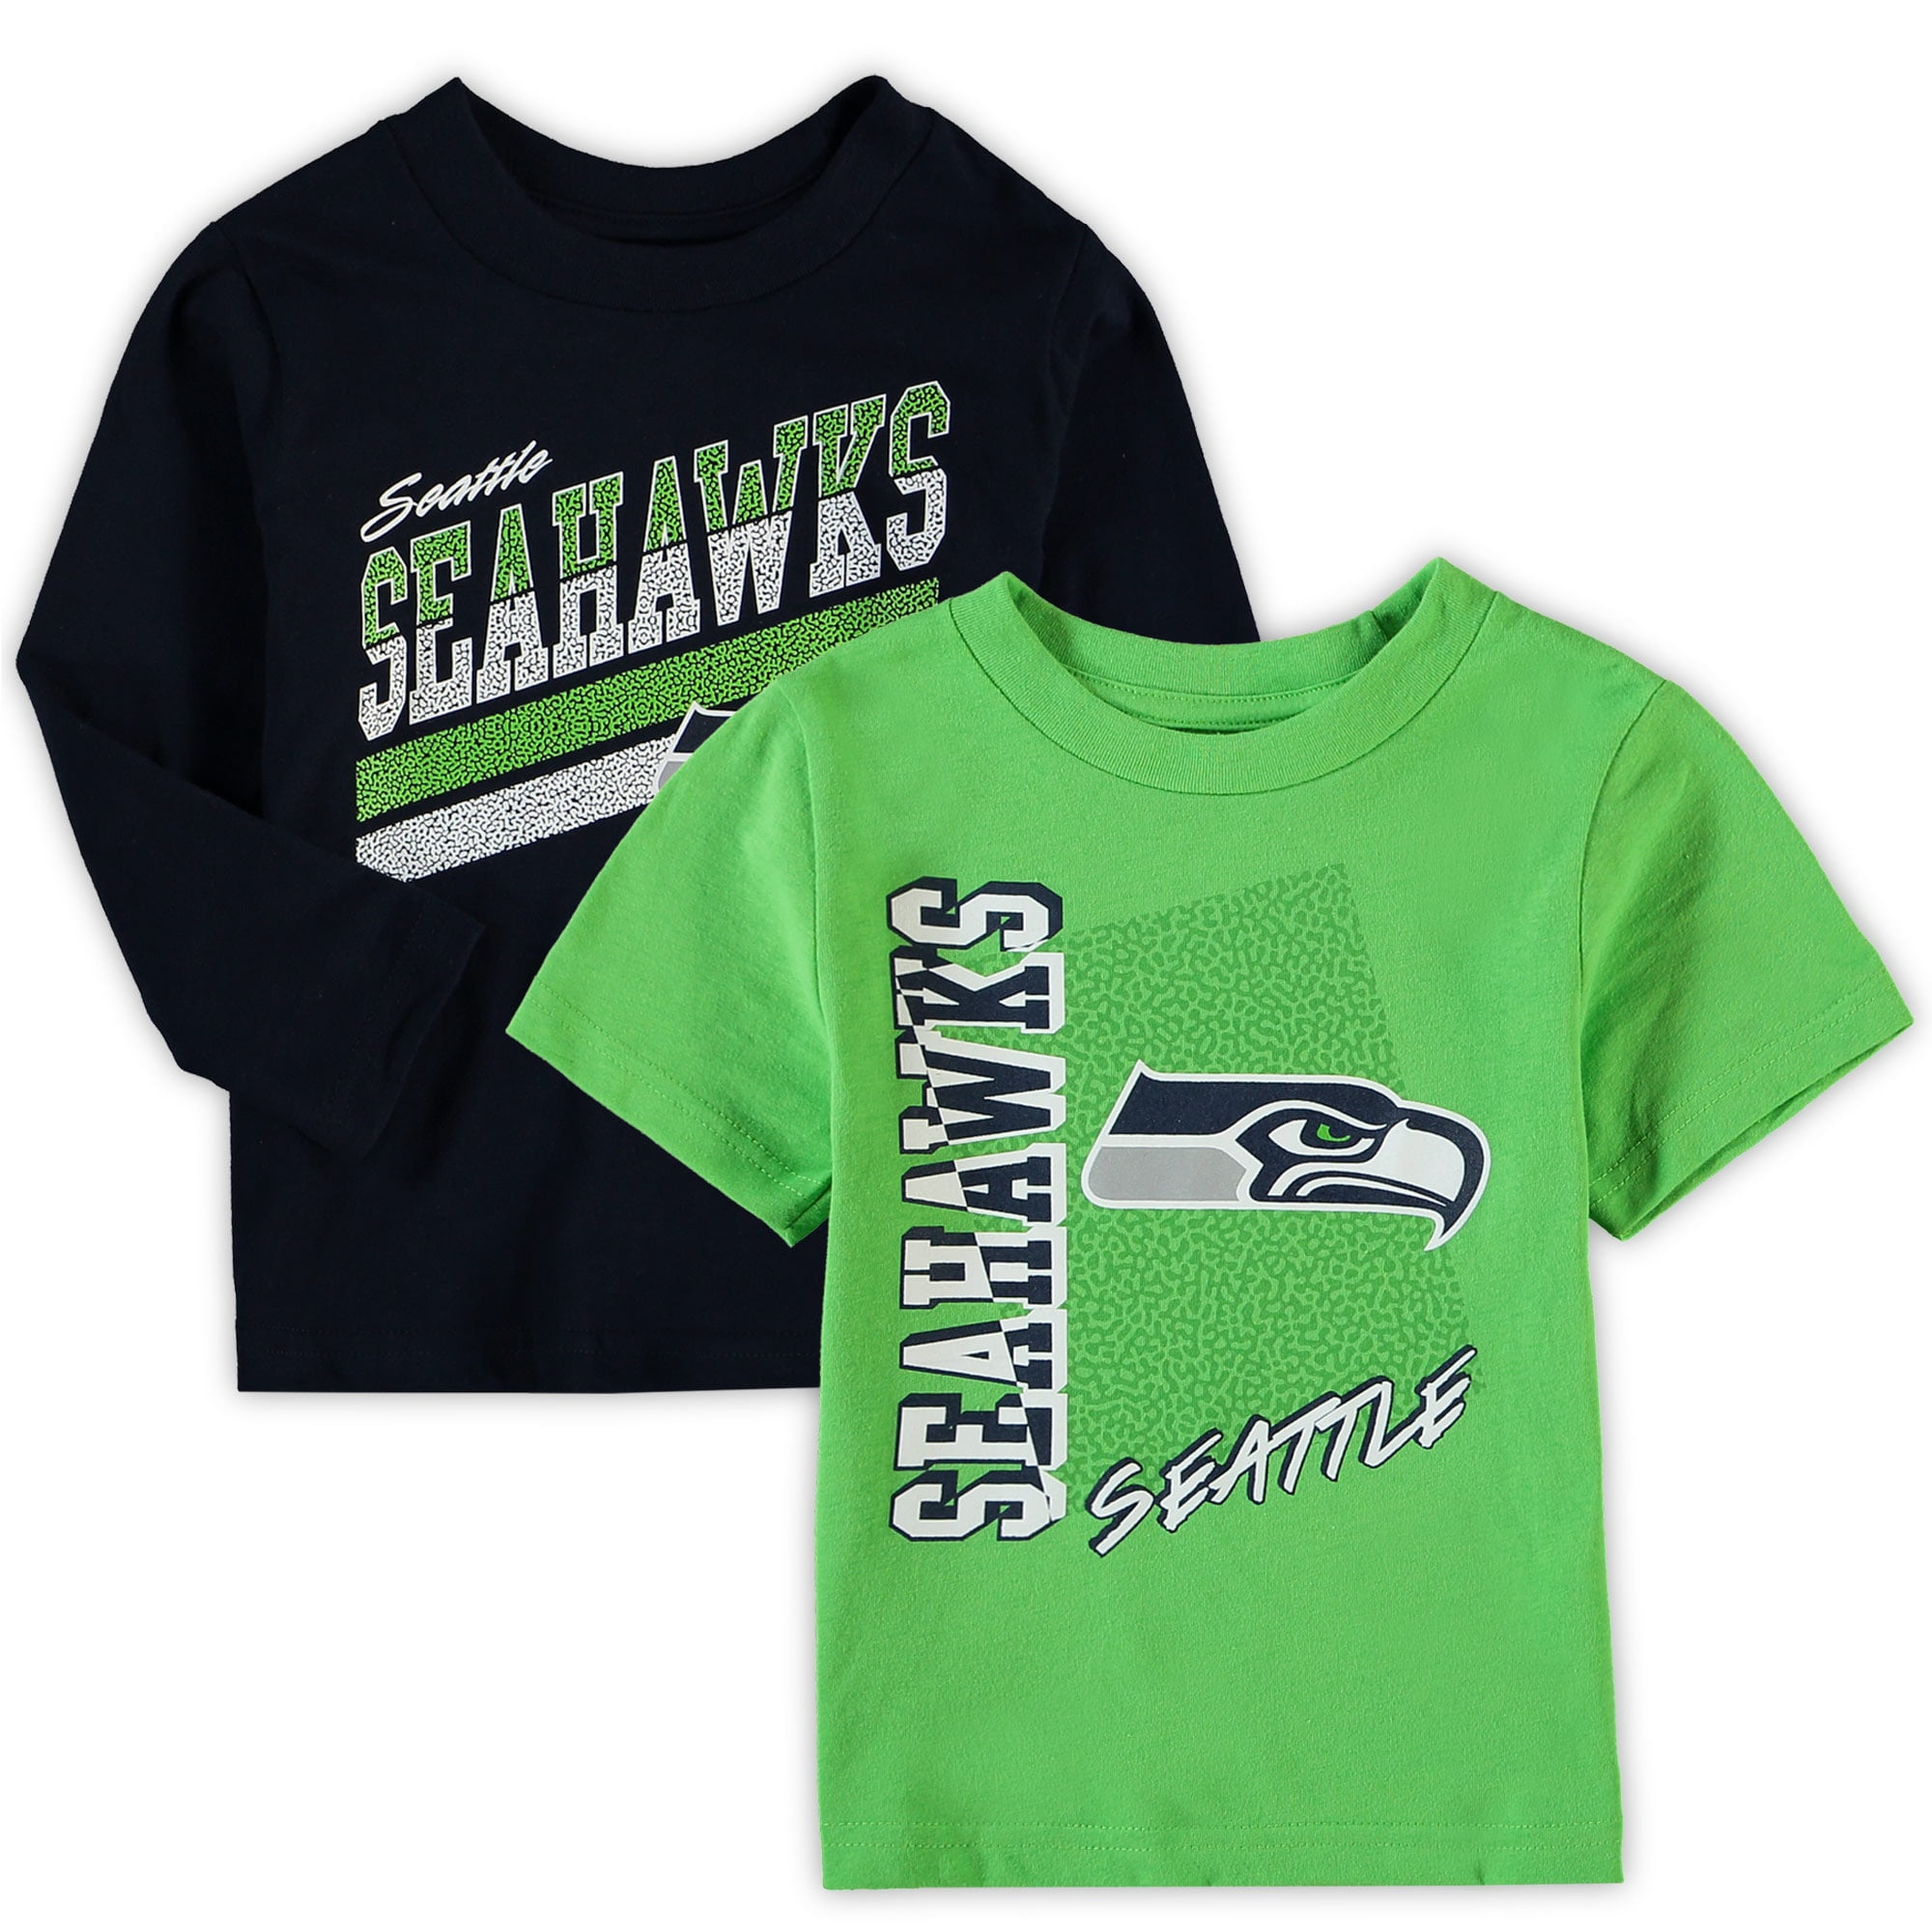 seattle seahawks t shirts sale